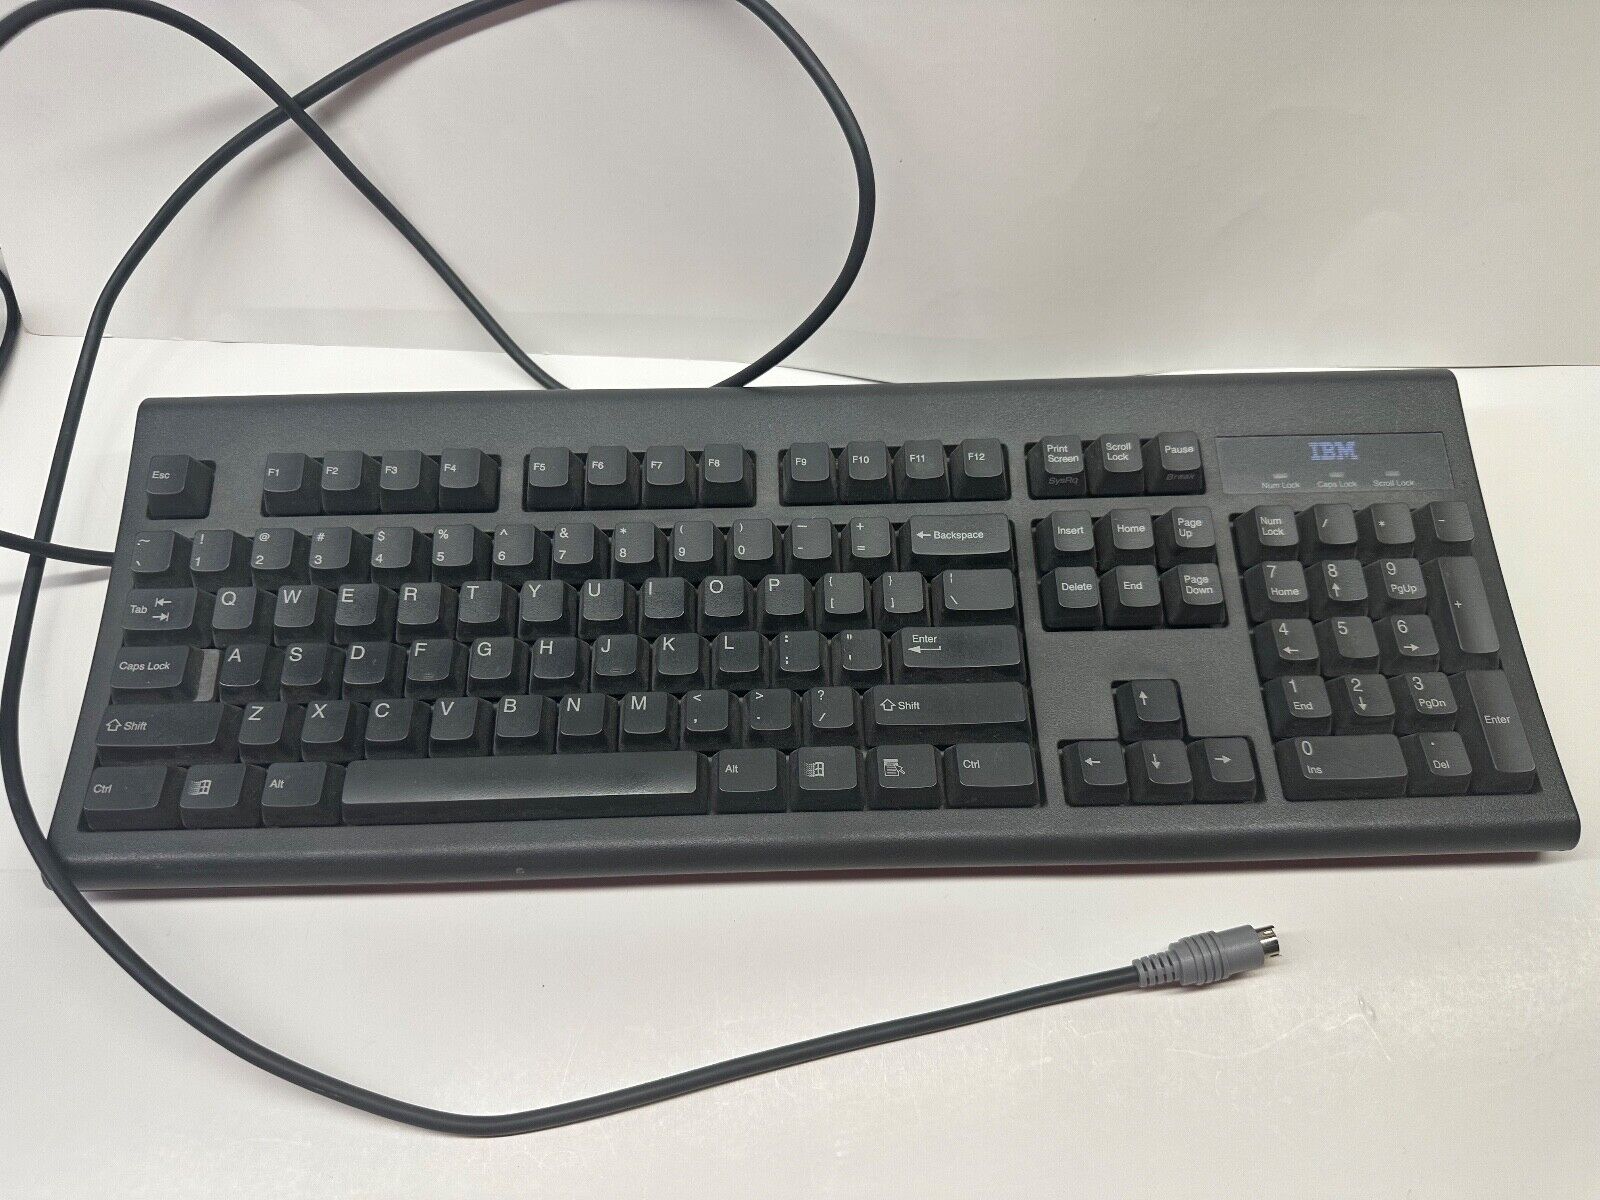 Vintage 1996 IBM KB-8923 black PS/2 keyboard with Windows keys, tested working